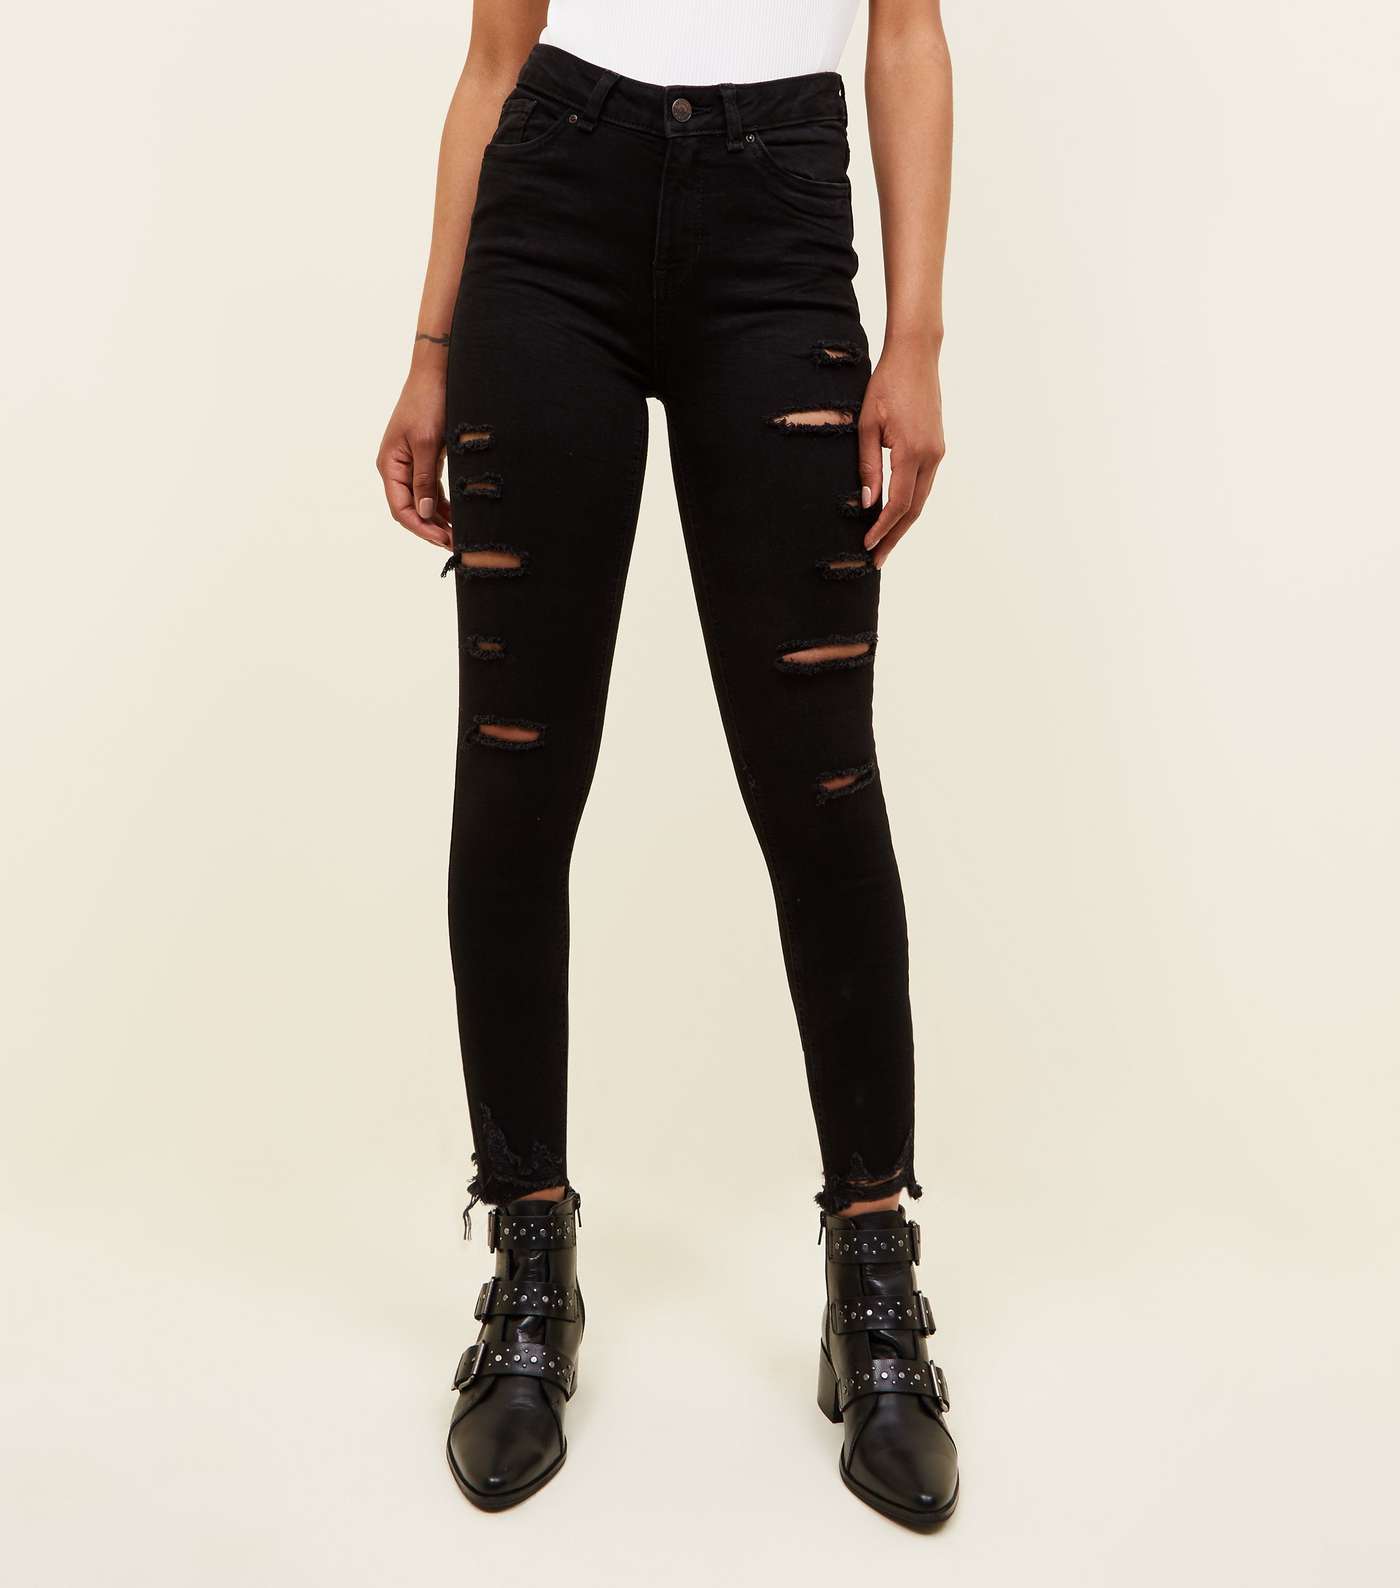 Black Ripped Ankle Grazer Skinny Jenna Jeans Image 2